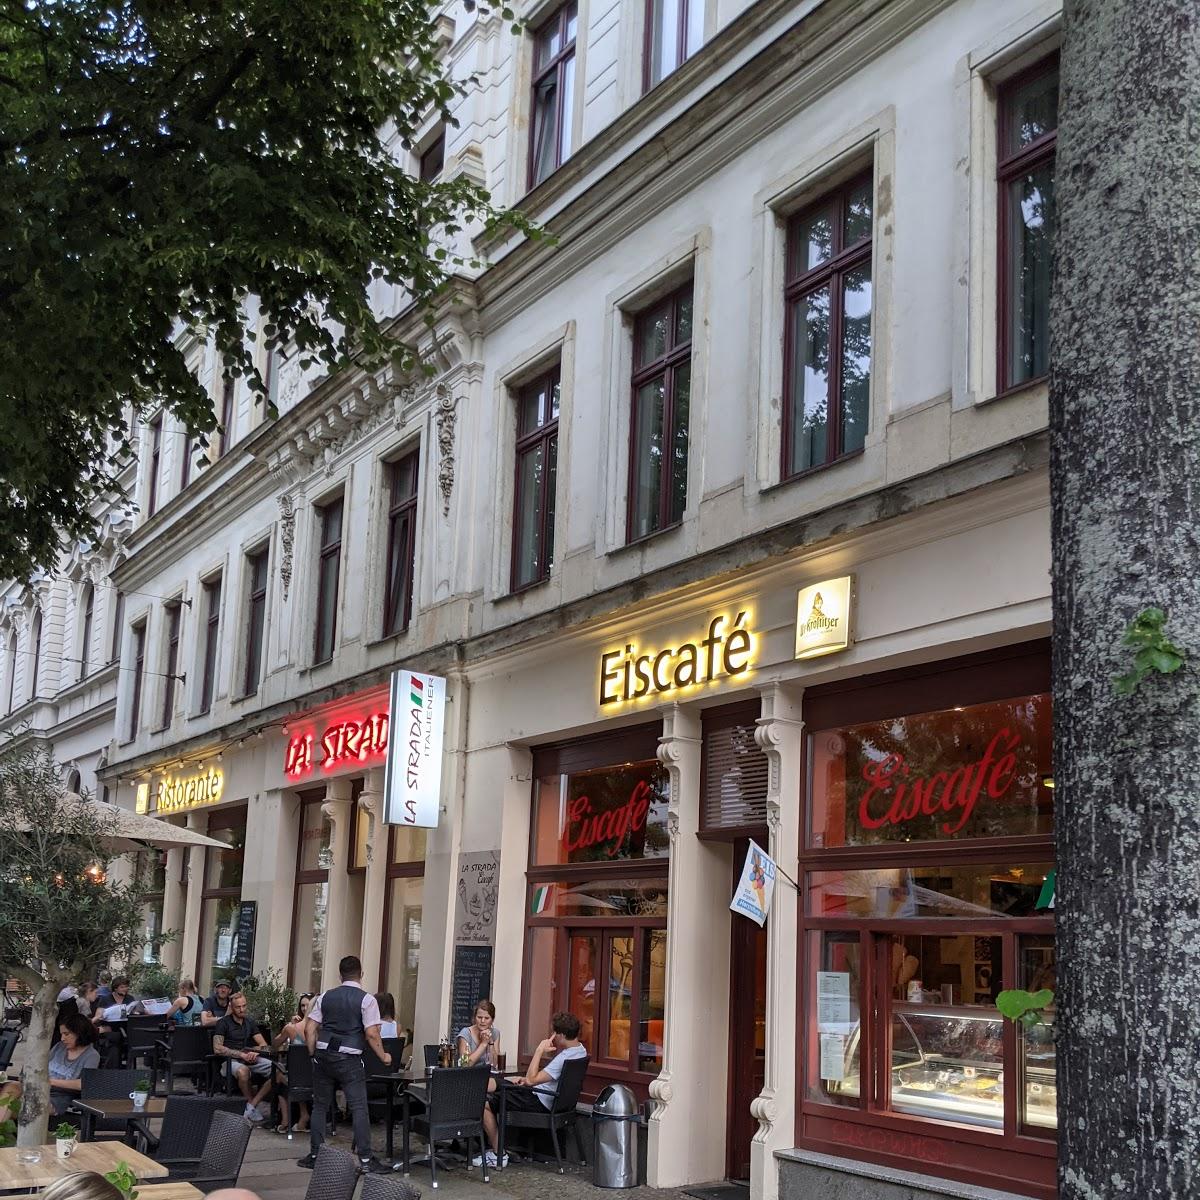 Restaurant "La Strada Pizzaria & Eiscafe" in Leipzig